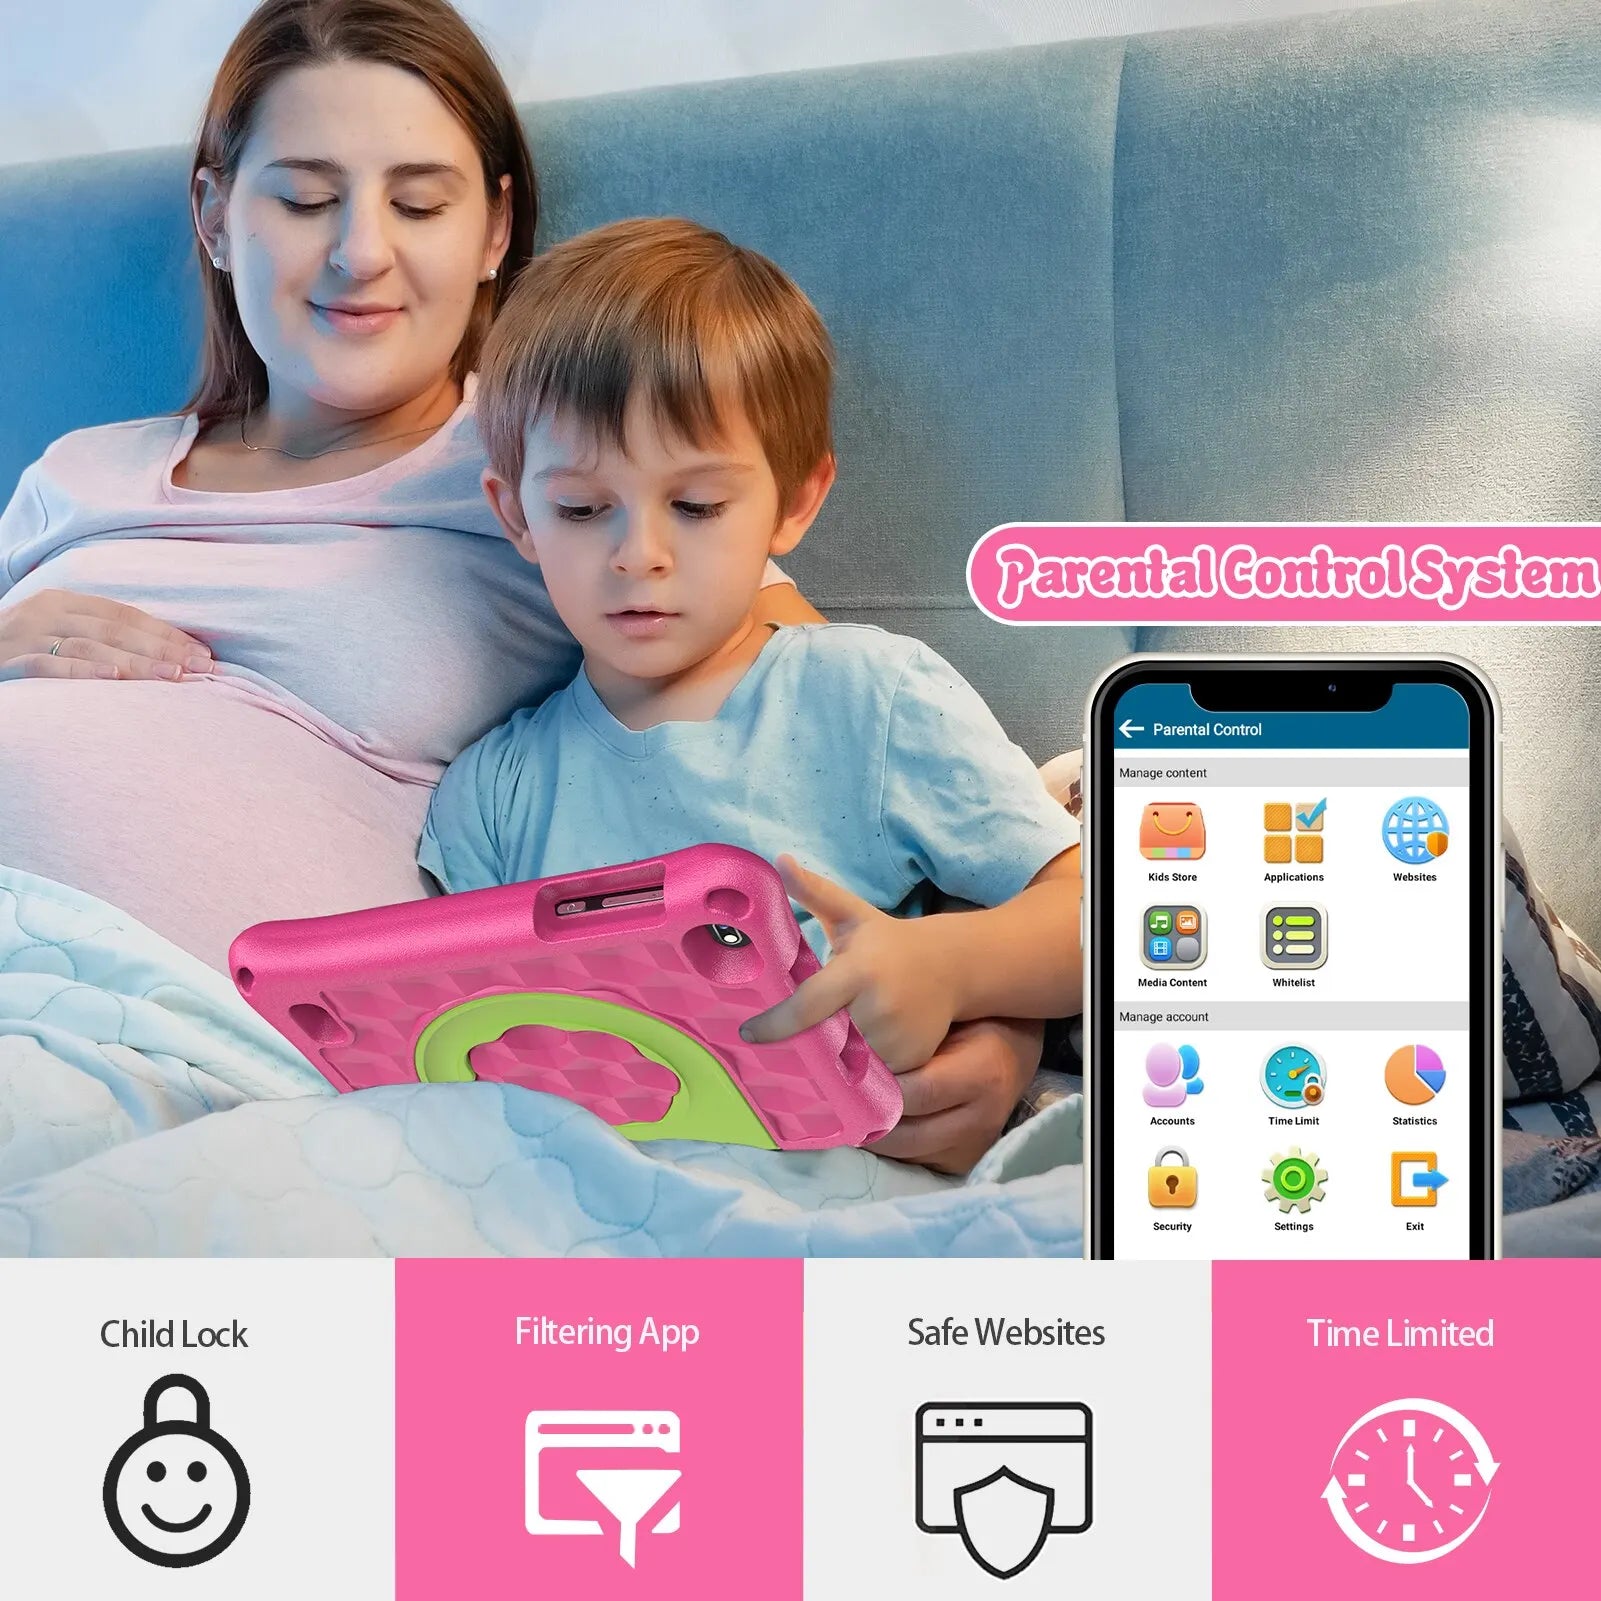 VASOUN Kids Tablet 7 Inch - Android 11, 2GB RAM, 32GB Storage, WiFi, Dual Camera, Parental Control, Google Playstore